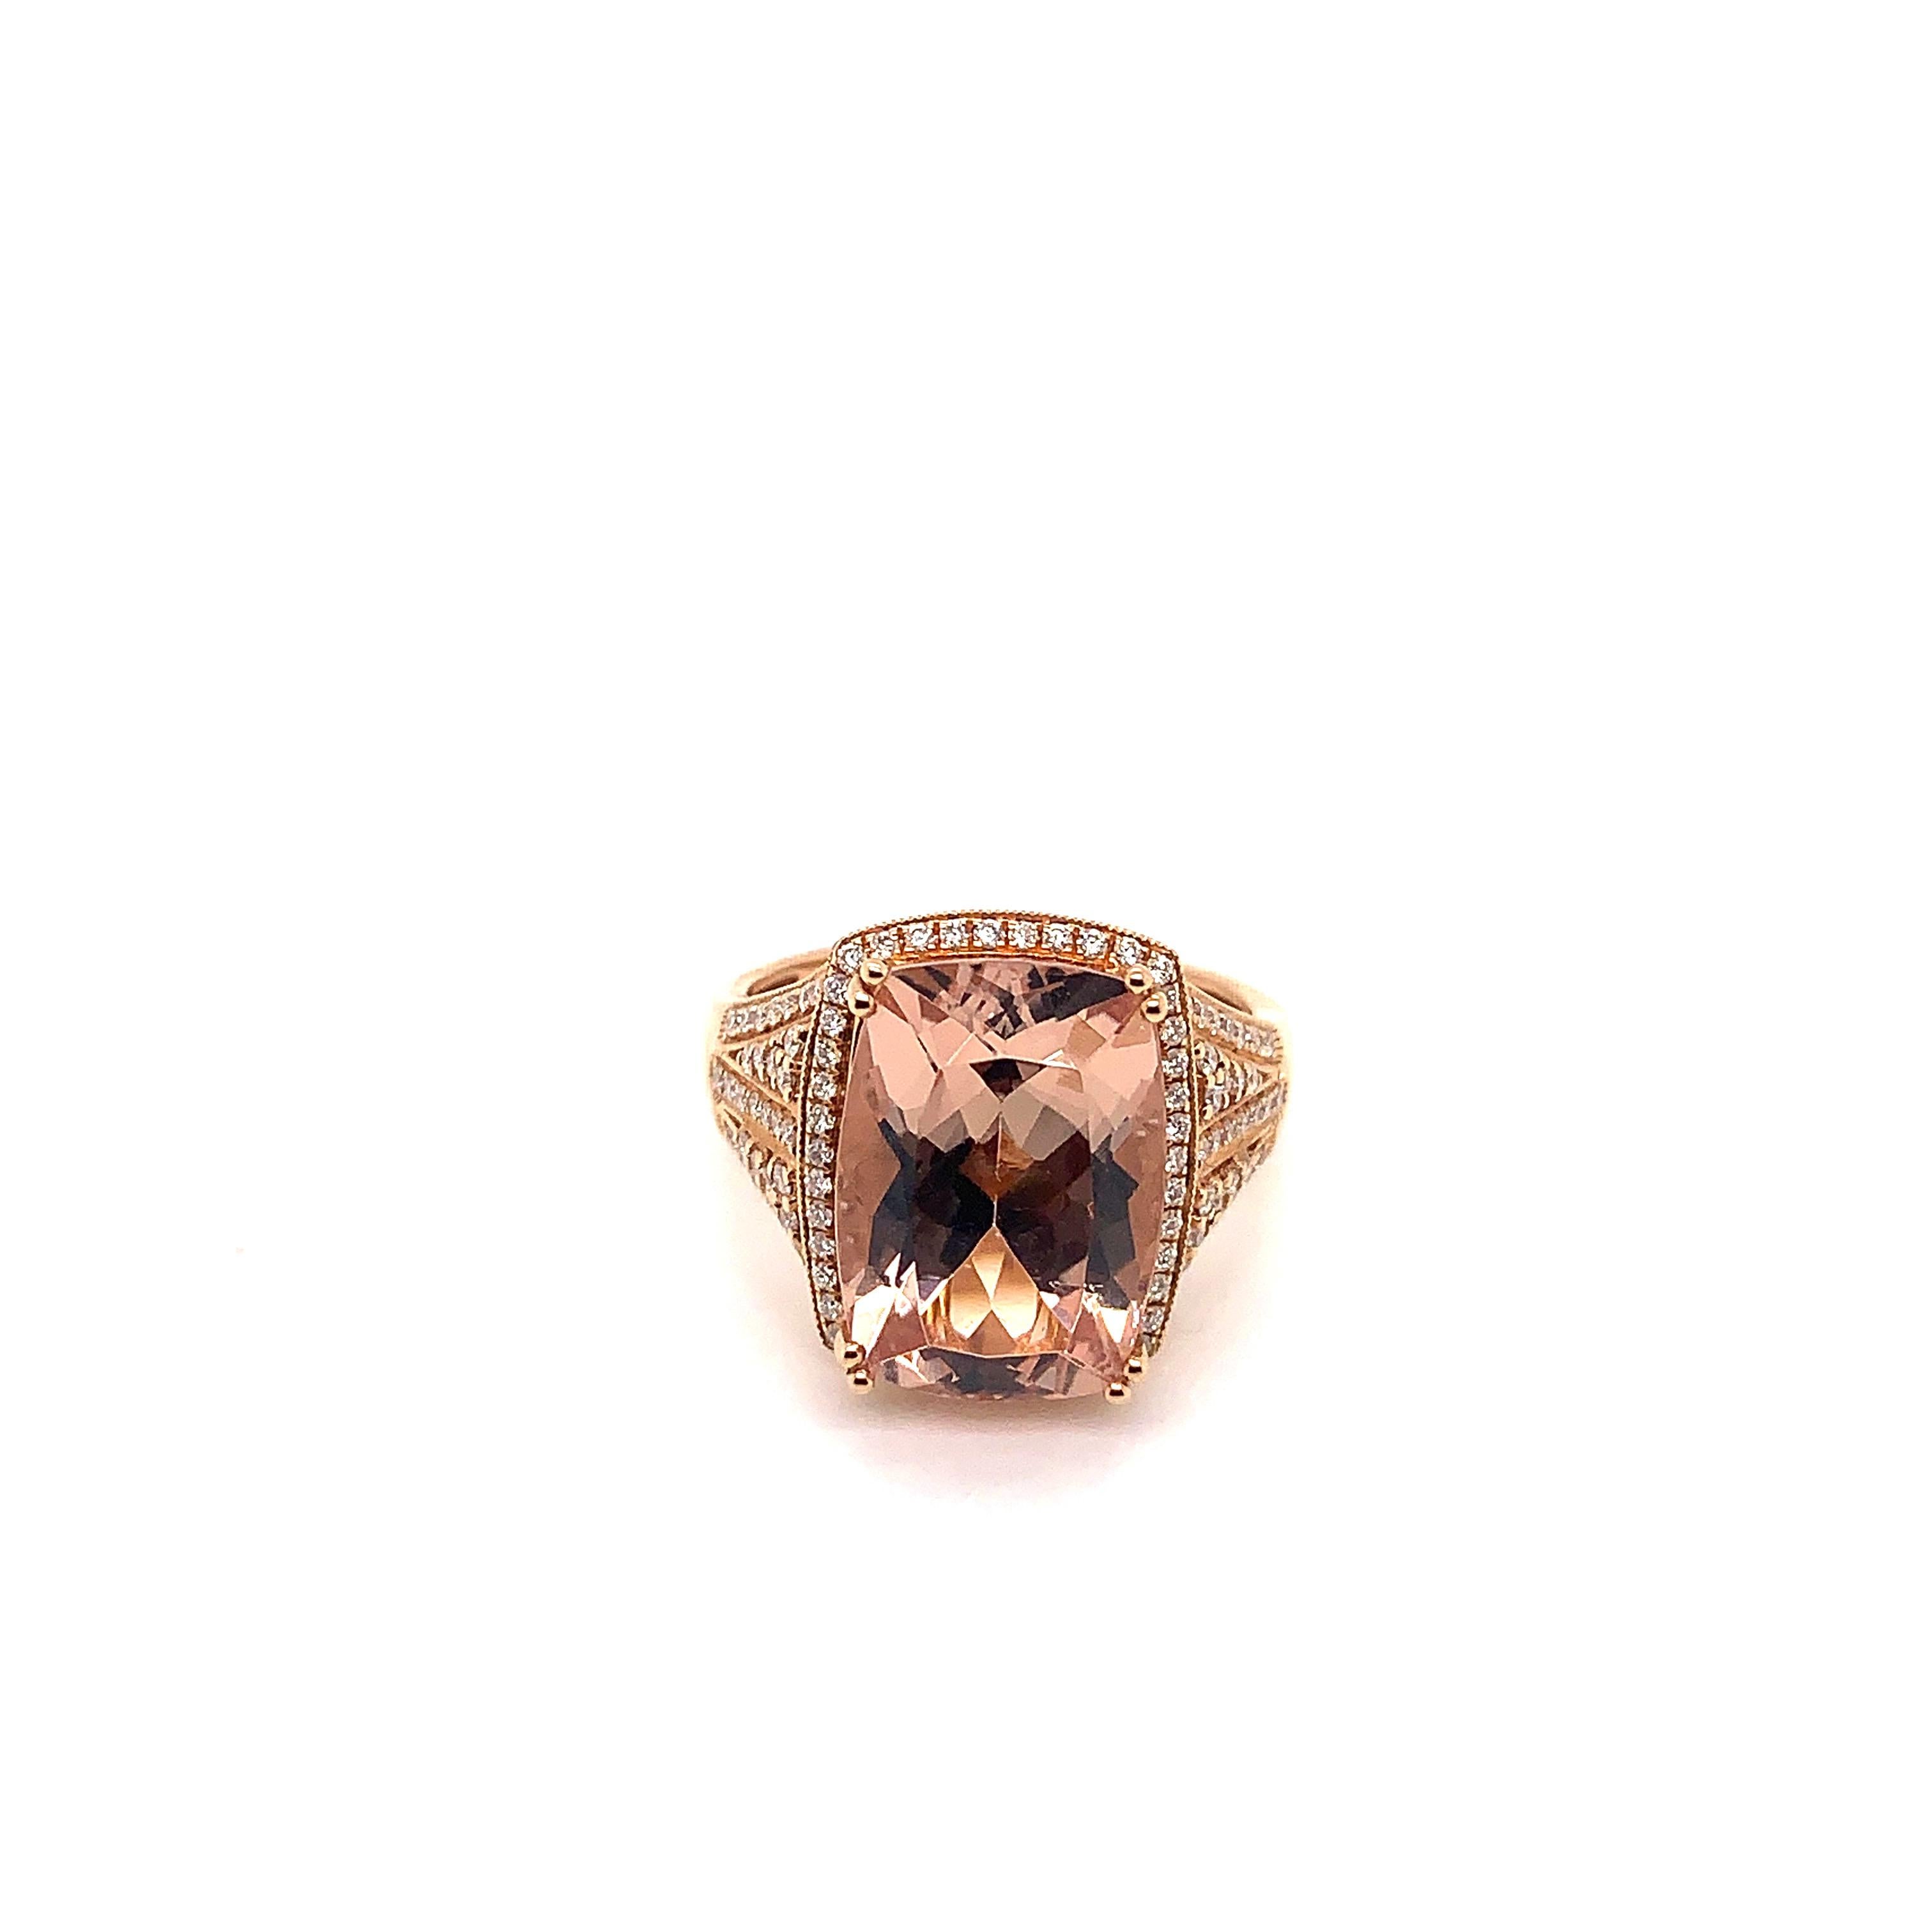 Classic morganite ring in 18K rose gold with diamonds. 

Morganite: 6.49 carat cushion shape.
Diamonds: 0.3702 carat, G colour, VS clarity. 
Gold: 4.988g, 18K rose gold. 